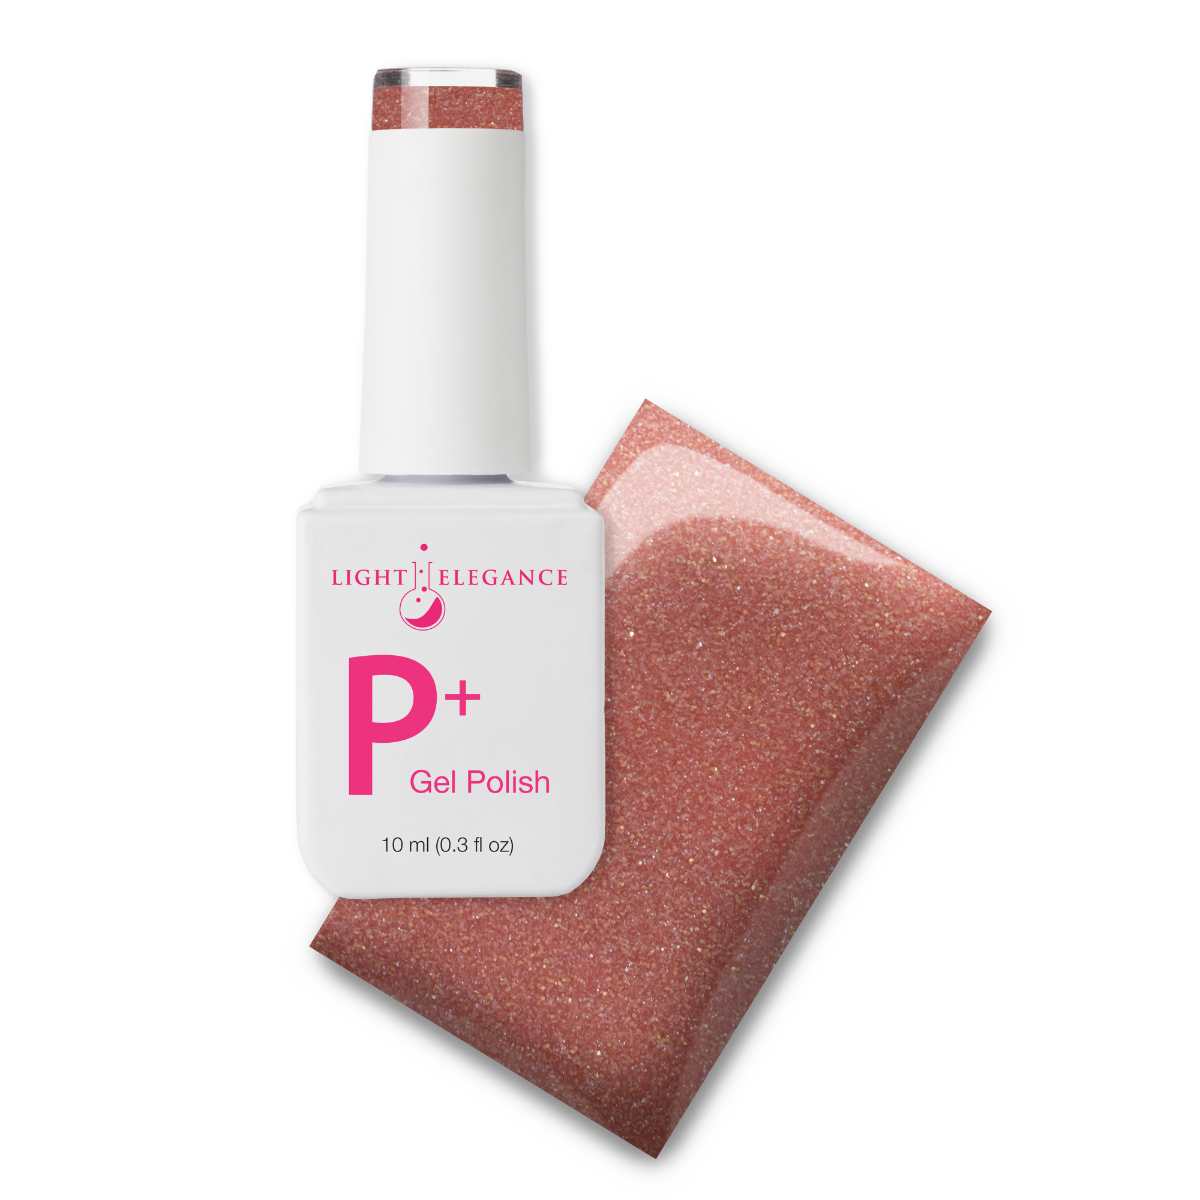 Light Elegance P+ Soak Off Color Gel - Mugshots & Manicures :: New Packaging - Creata Beauty - Professional Beauty Products